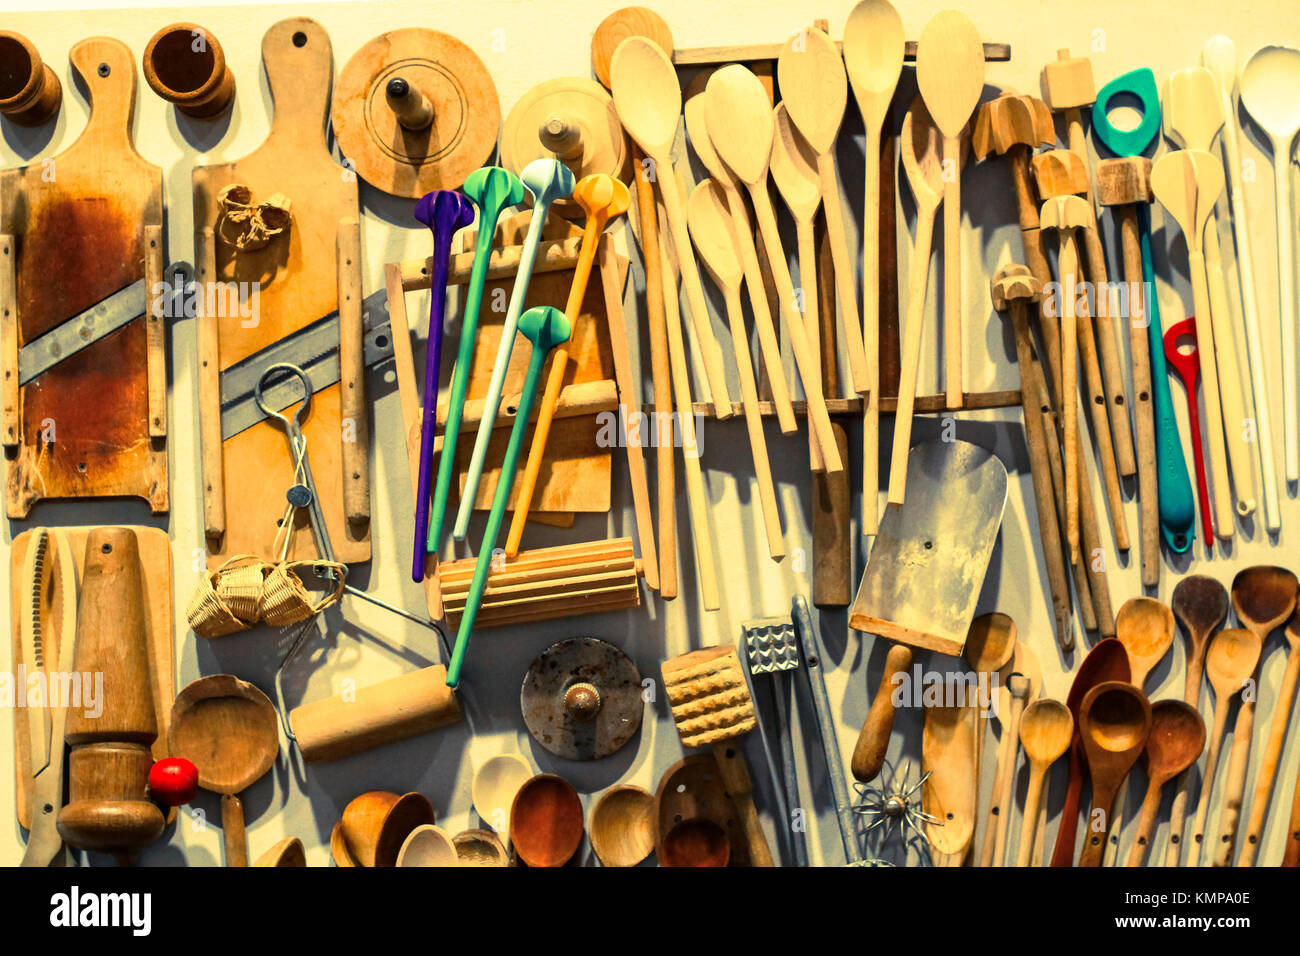 Several hanging kitchen utensils. Stock Photo